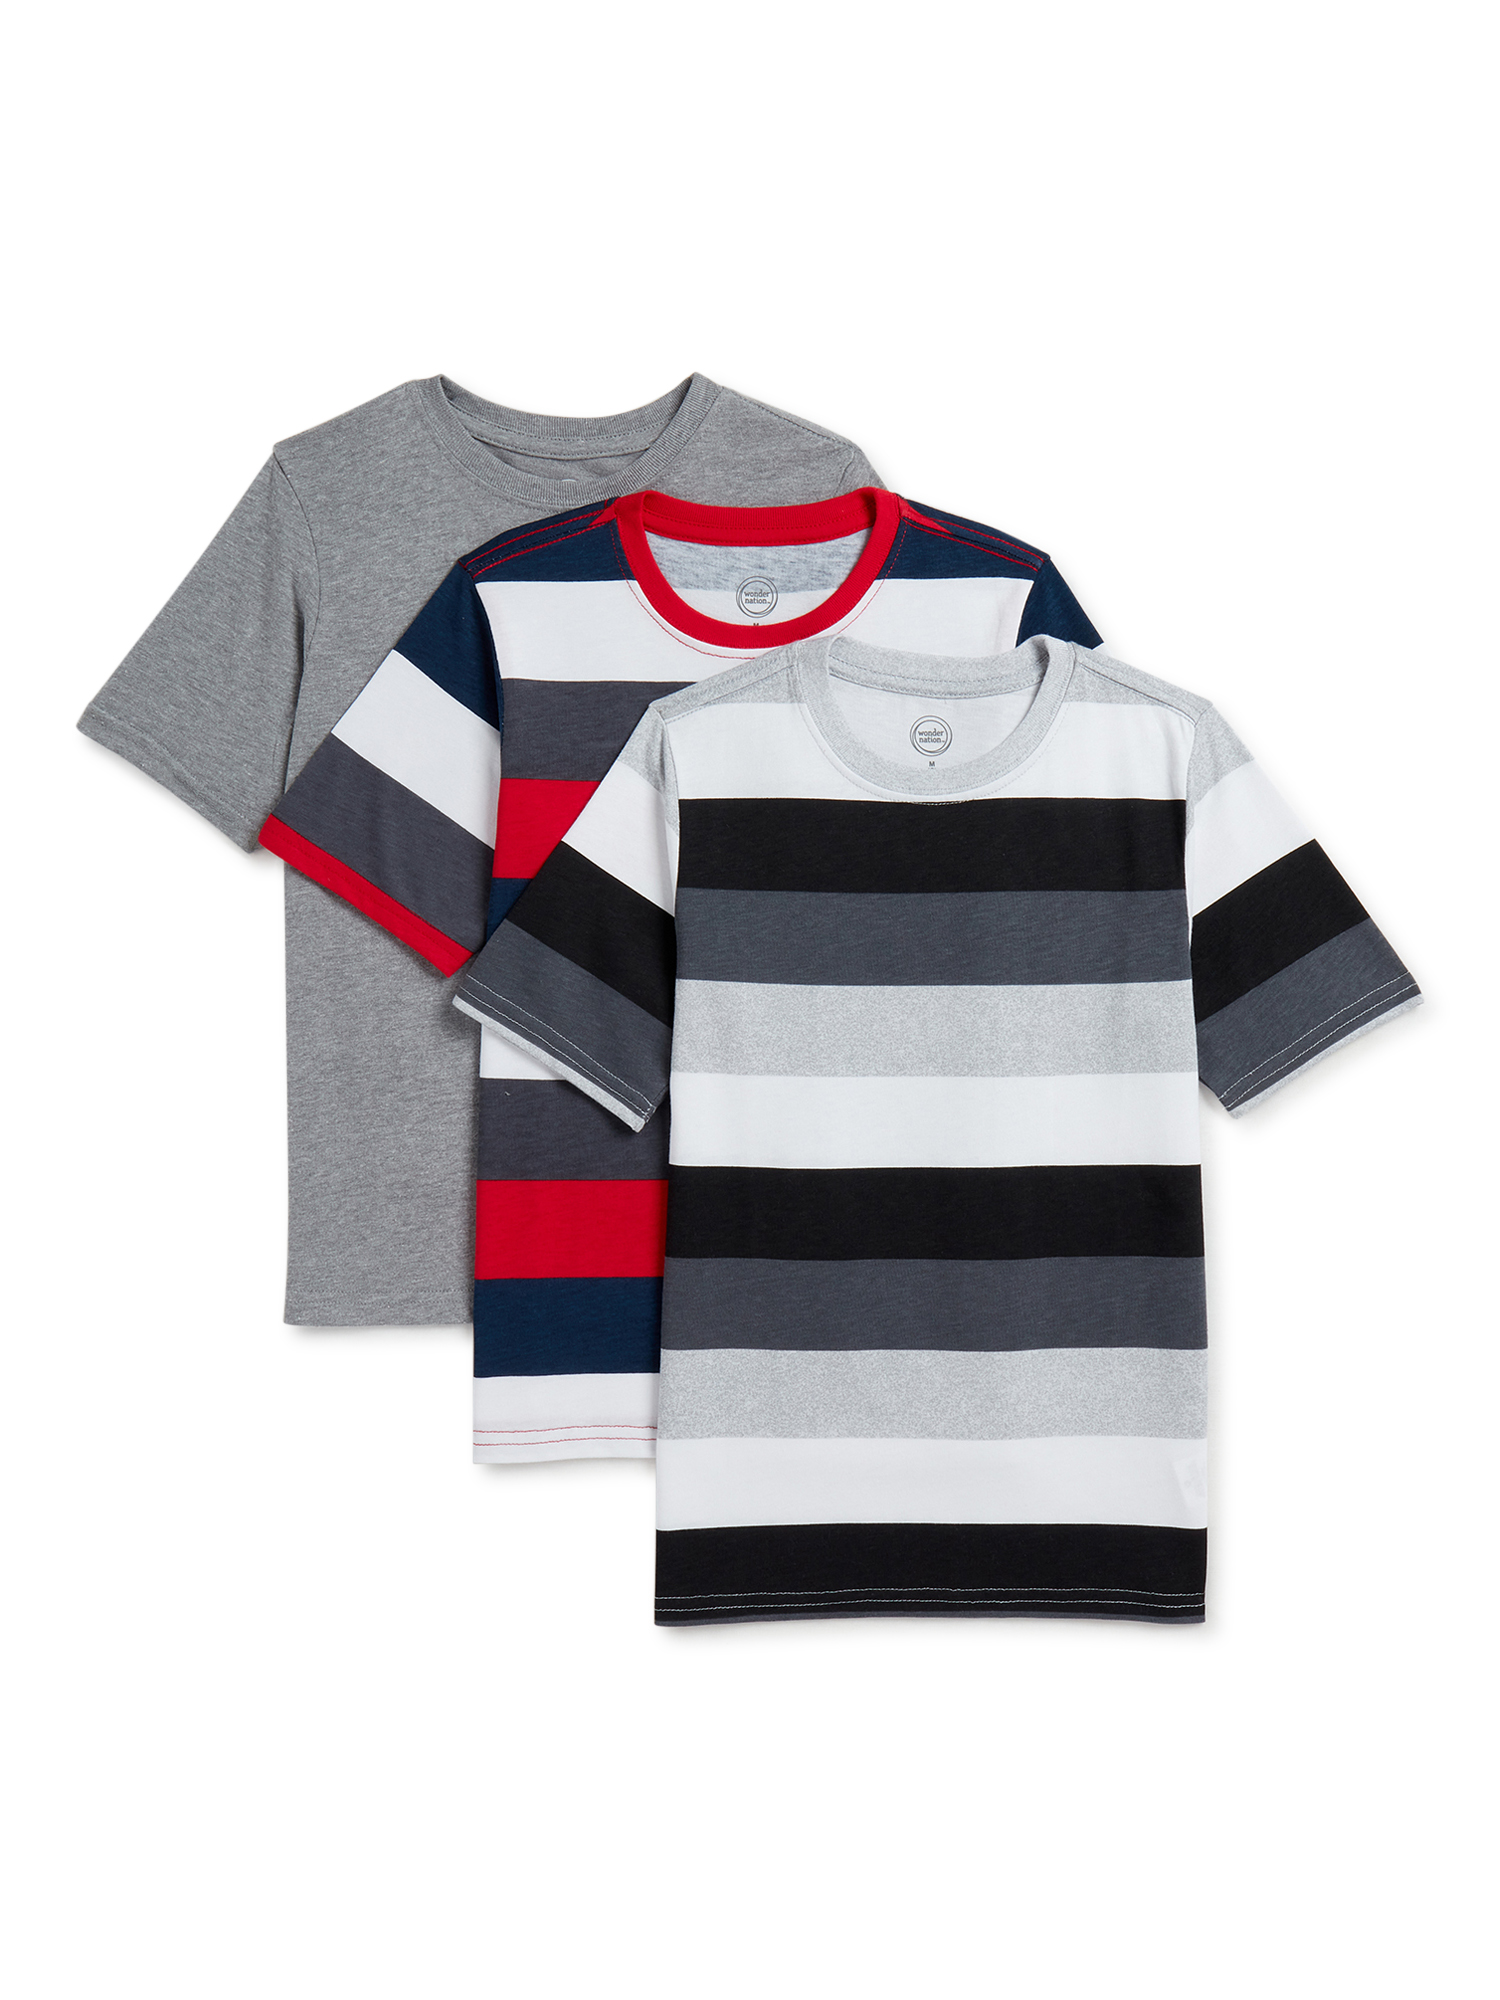 Colors *ships free Wonder Nation Boys Striped Short Sleeve T-Shirt Size S-L 3